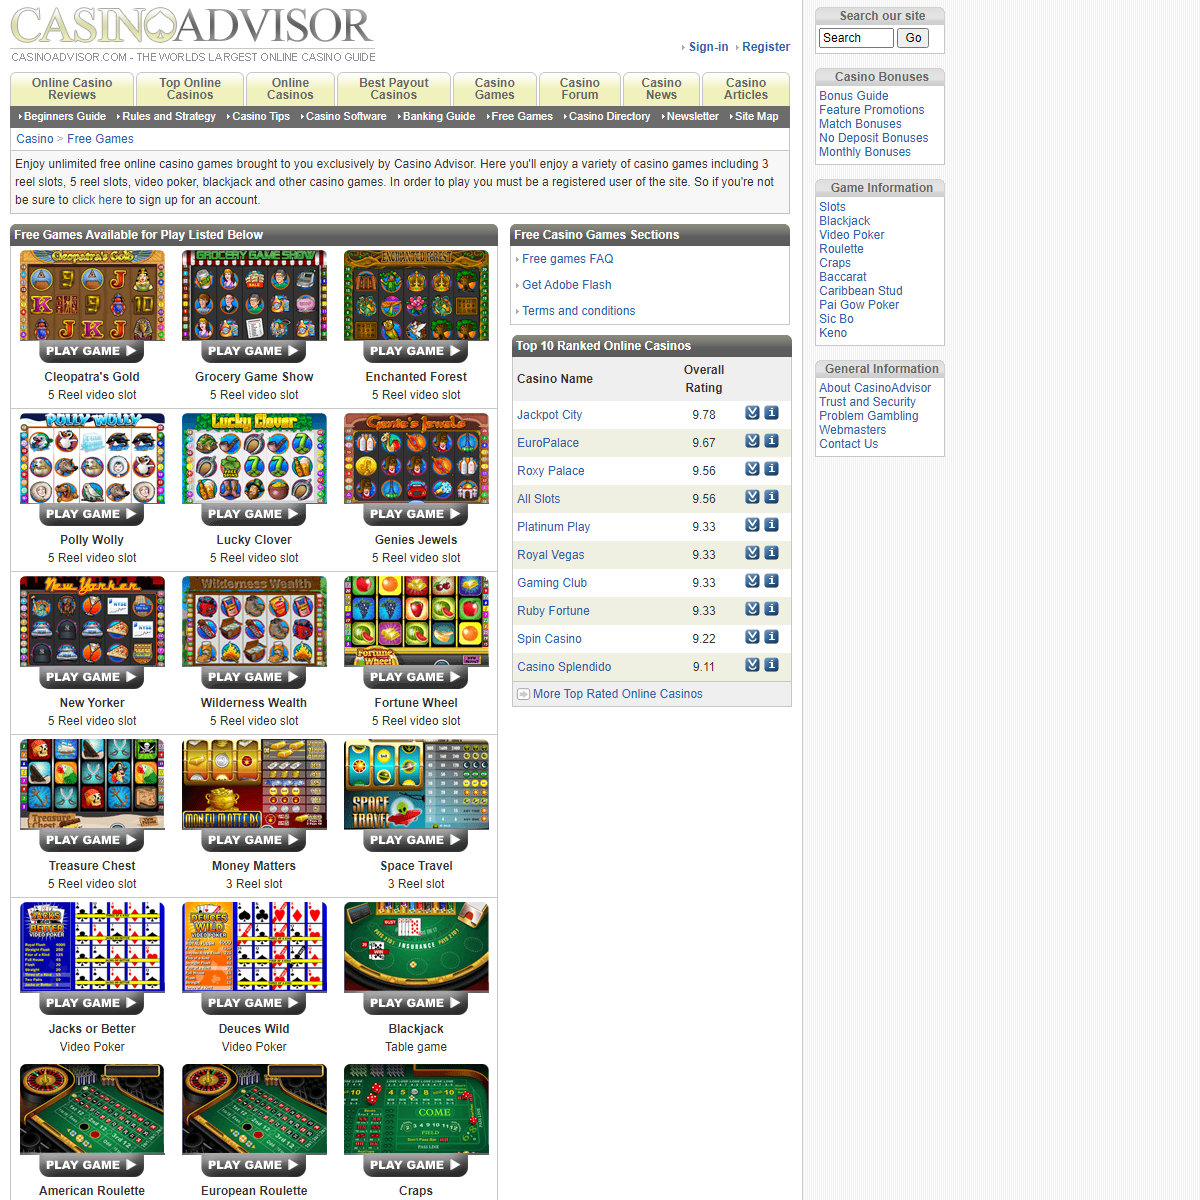 A complete backup of http://www.casinoadvisor.com/free-casino-games.html